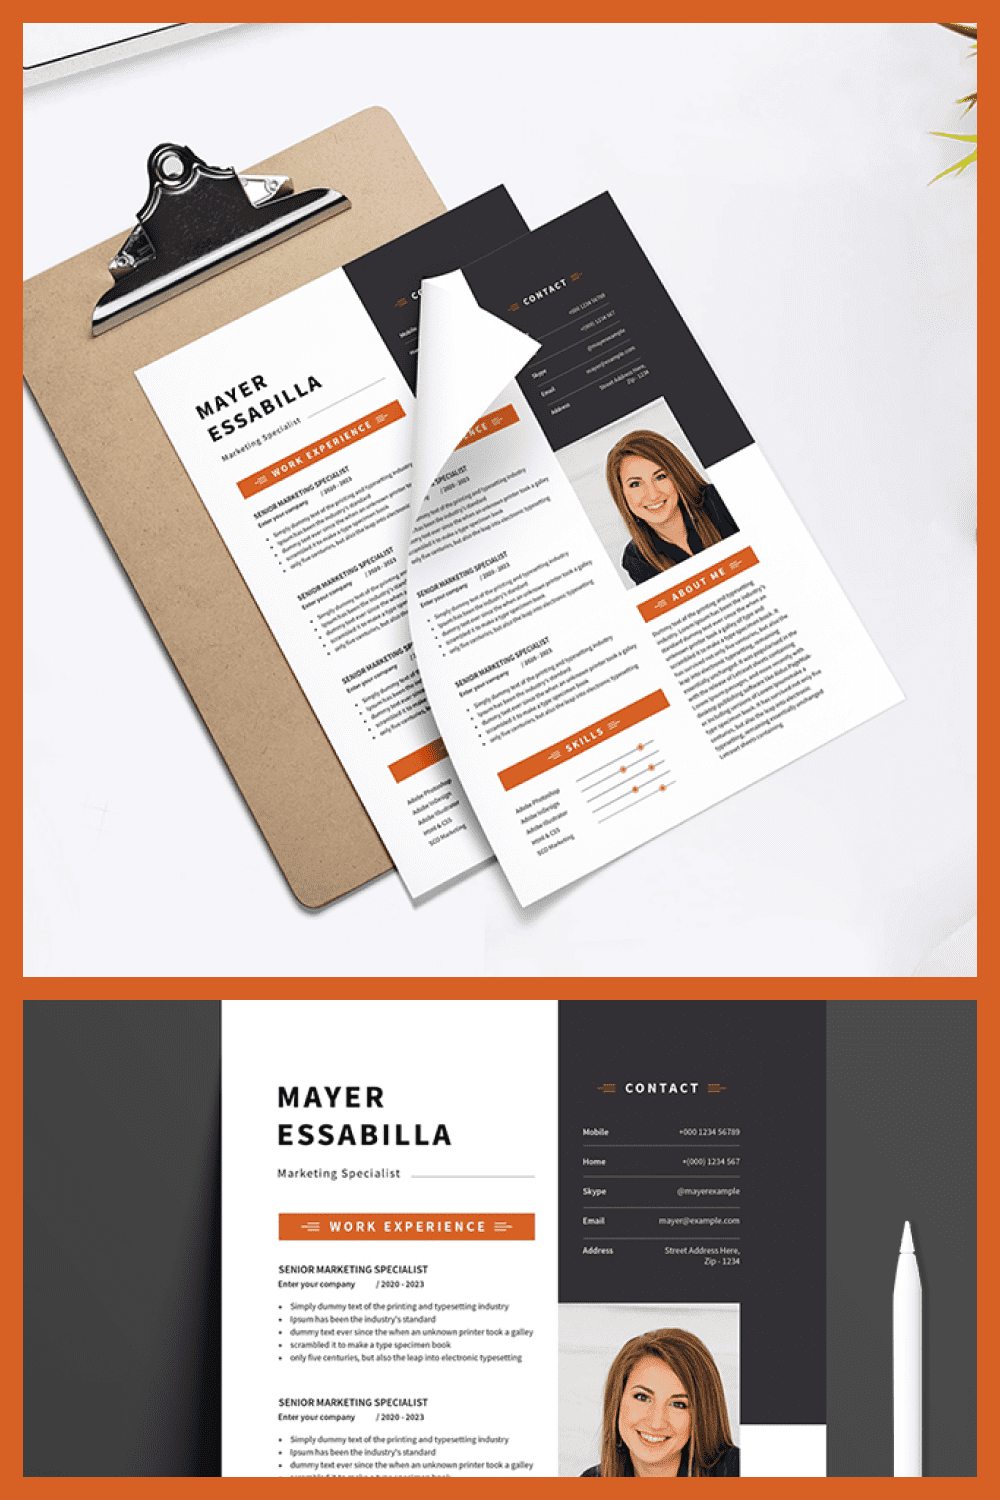 Professional Marketing Specialist Resume CV Template - MasterBundles - Pinterest Collage Image.